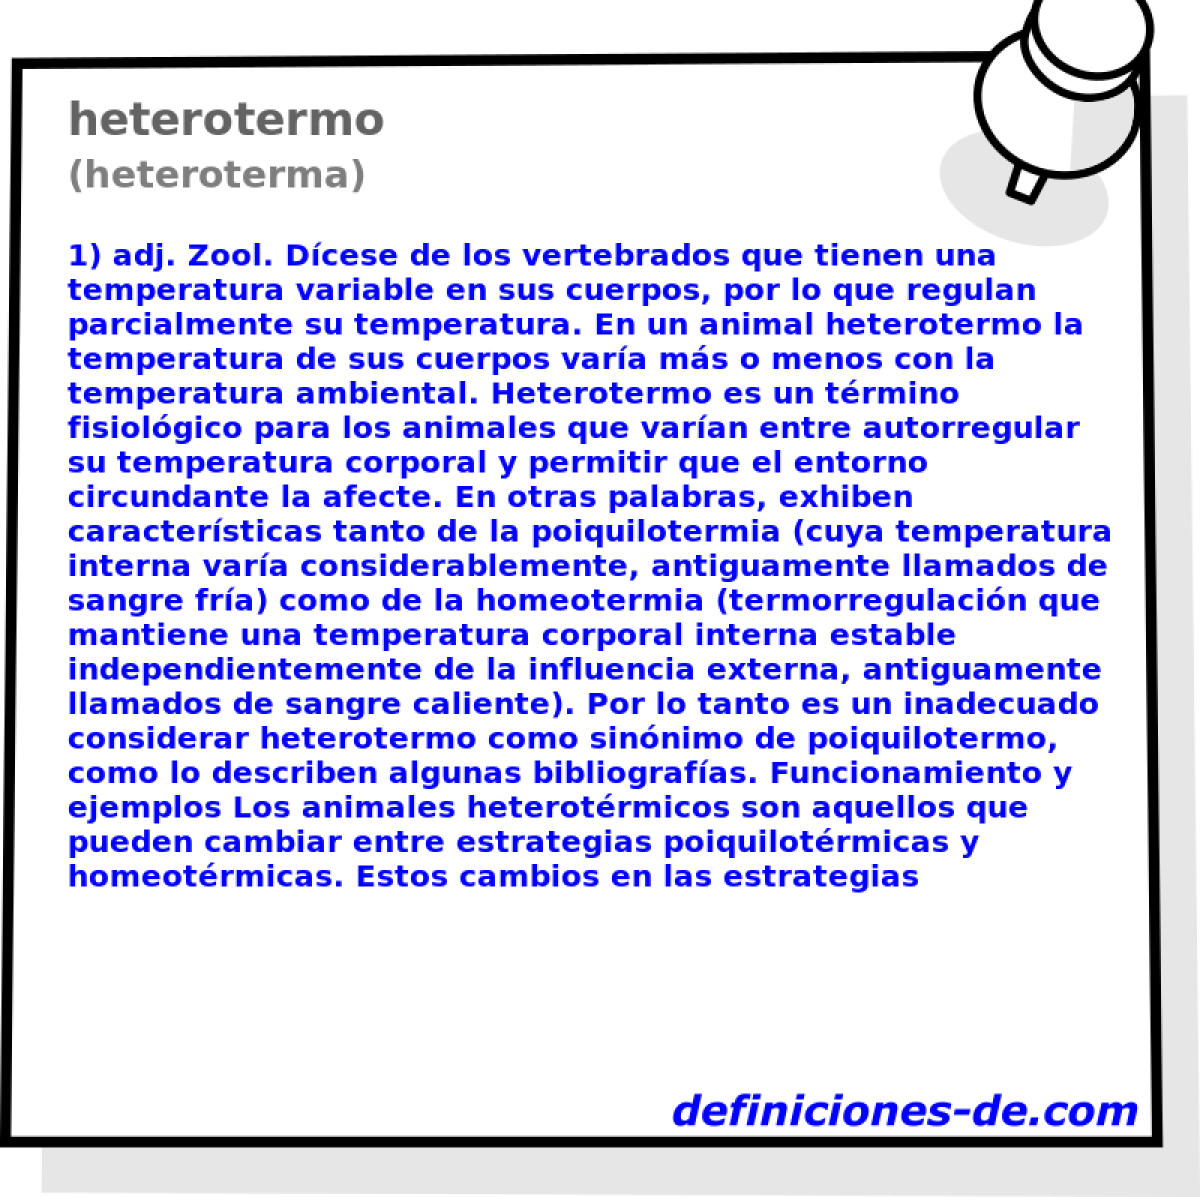 heterotermo (heteroterma)